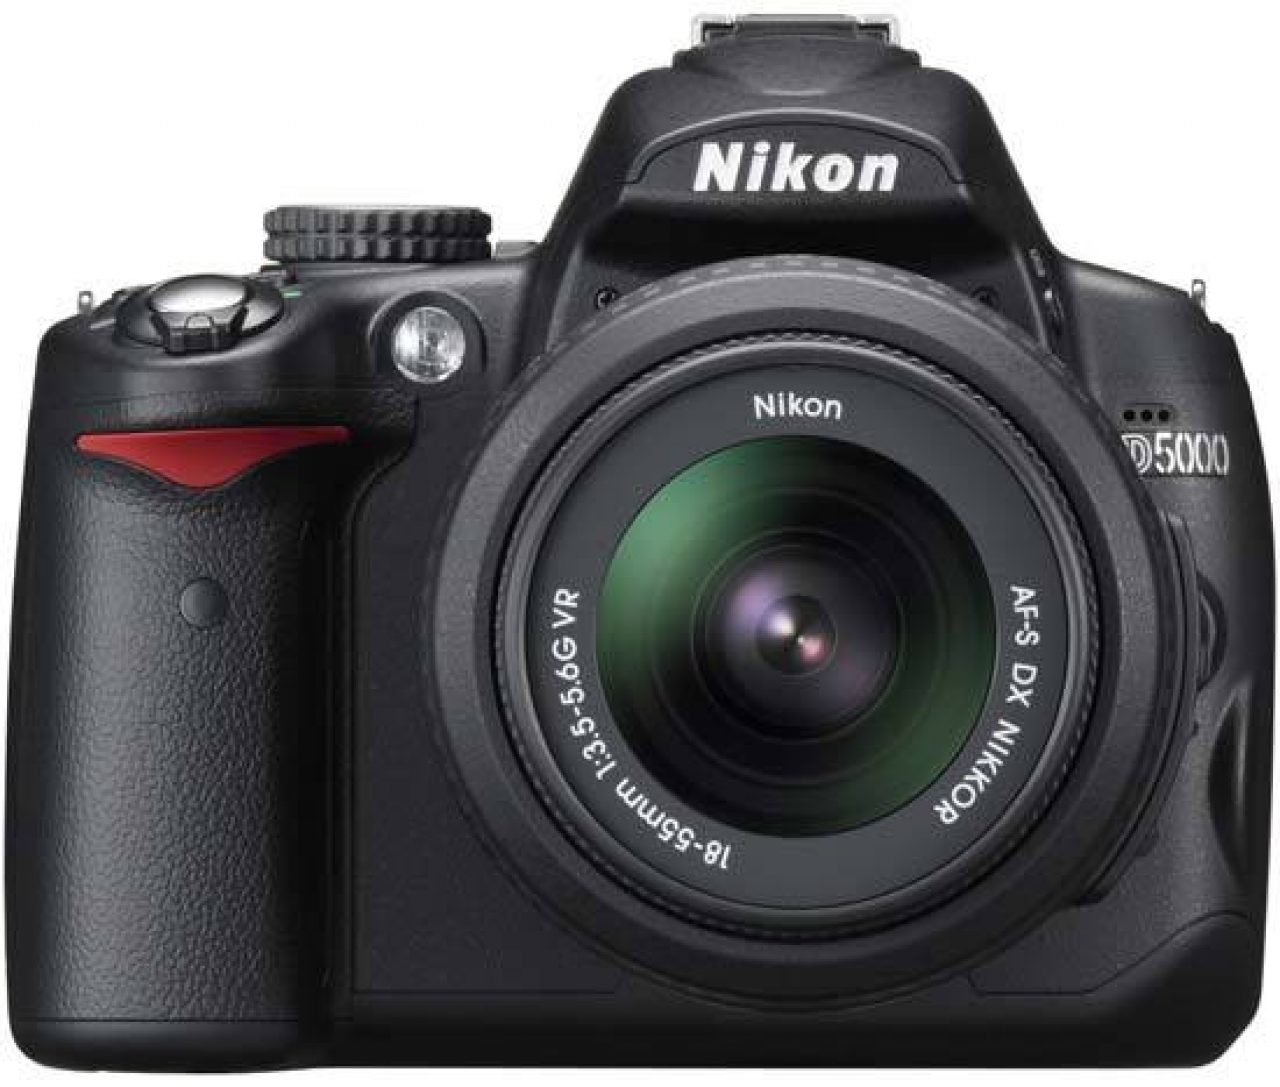 Nikon D5000 Review | Photography Blog